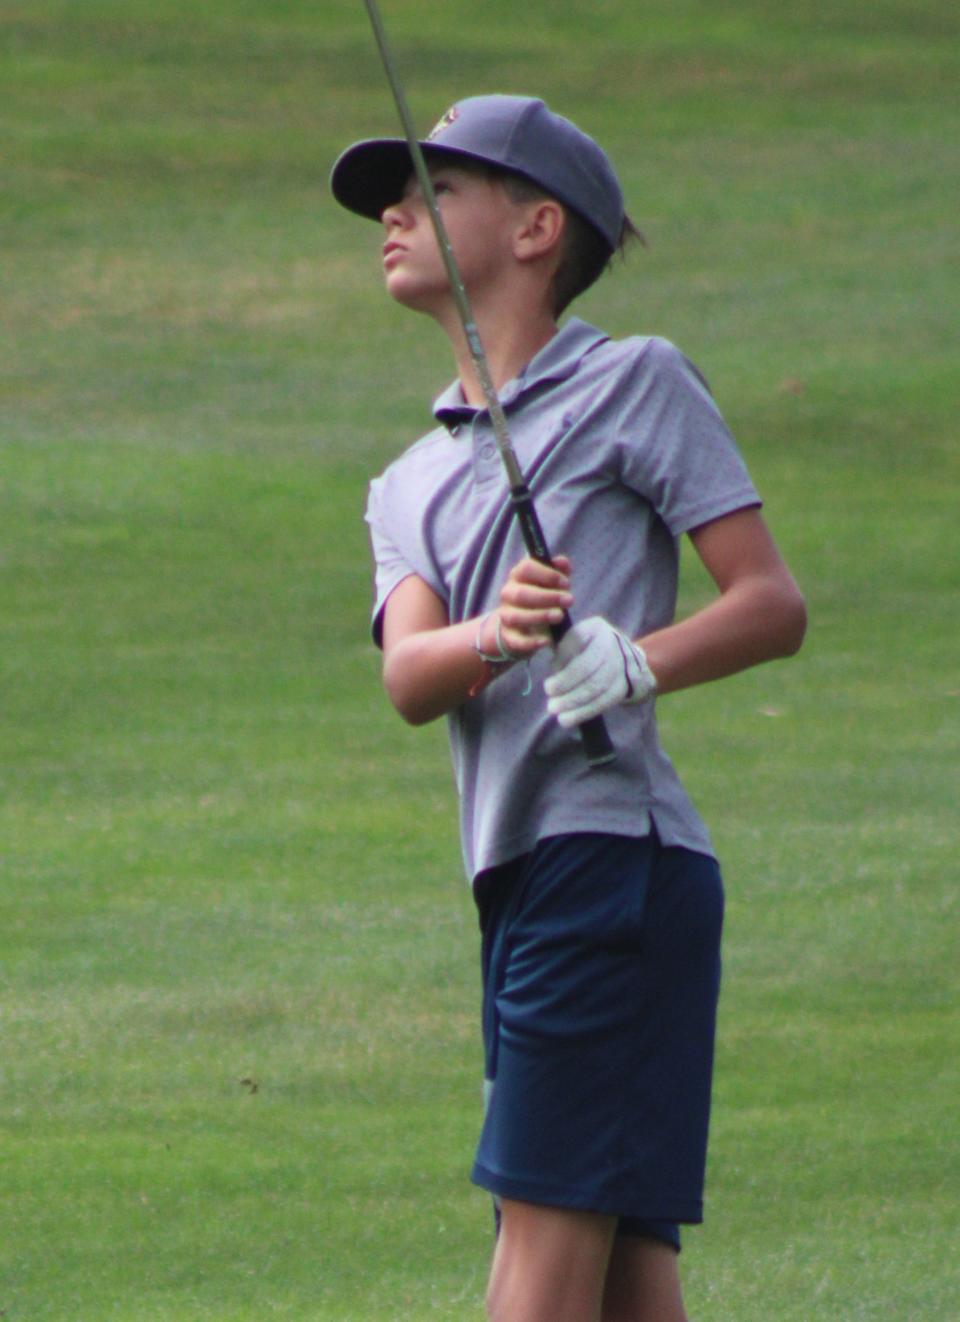 James Morgan of North Benton won the boys' 13-15 age division at the Olde Dutch Mill Junior Tournament.